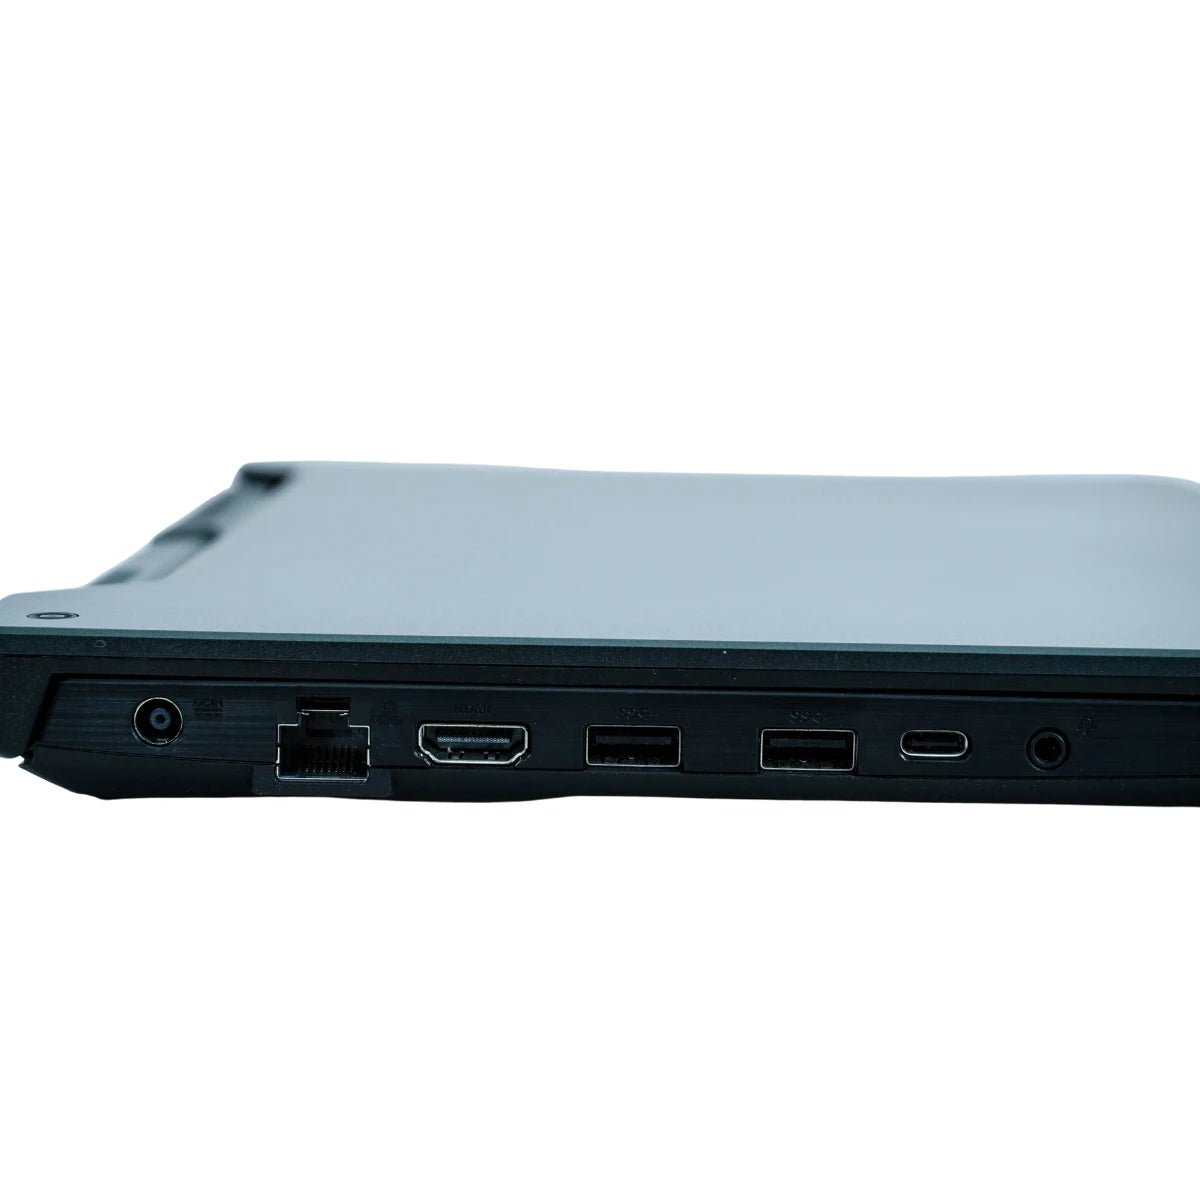 Laptop Gamer - Asus TUF F15 | i7 11va Gen | 16 GB RAM | 480 GB M.2 SSD | 4 GB Video NVIDIA | 15.6” - PC ONE MÉXICOAsusGamer